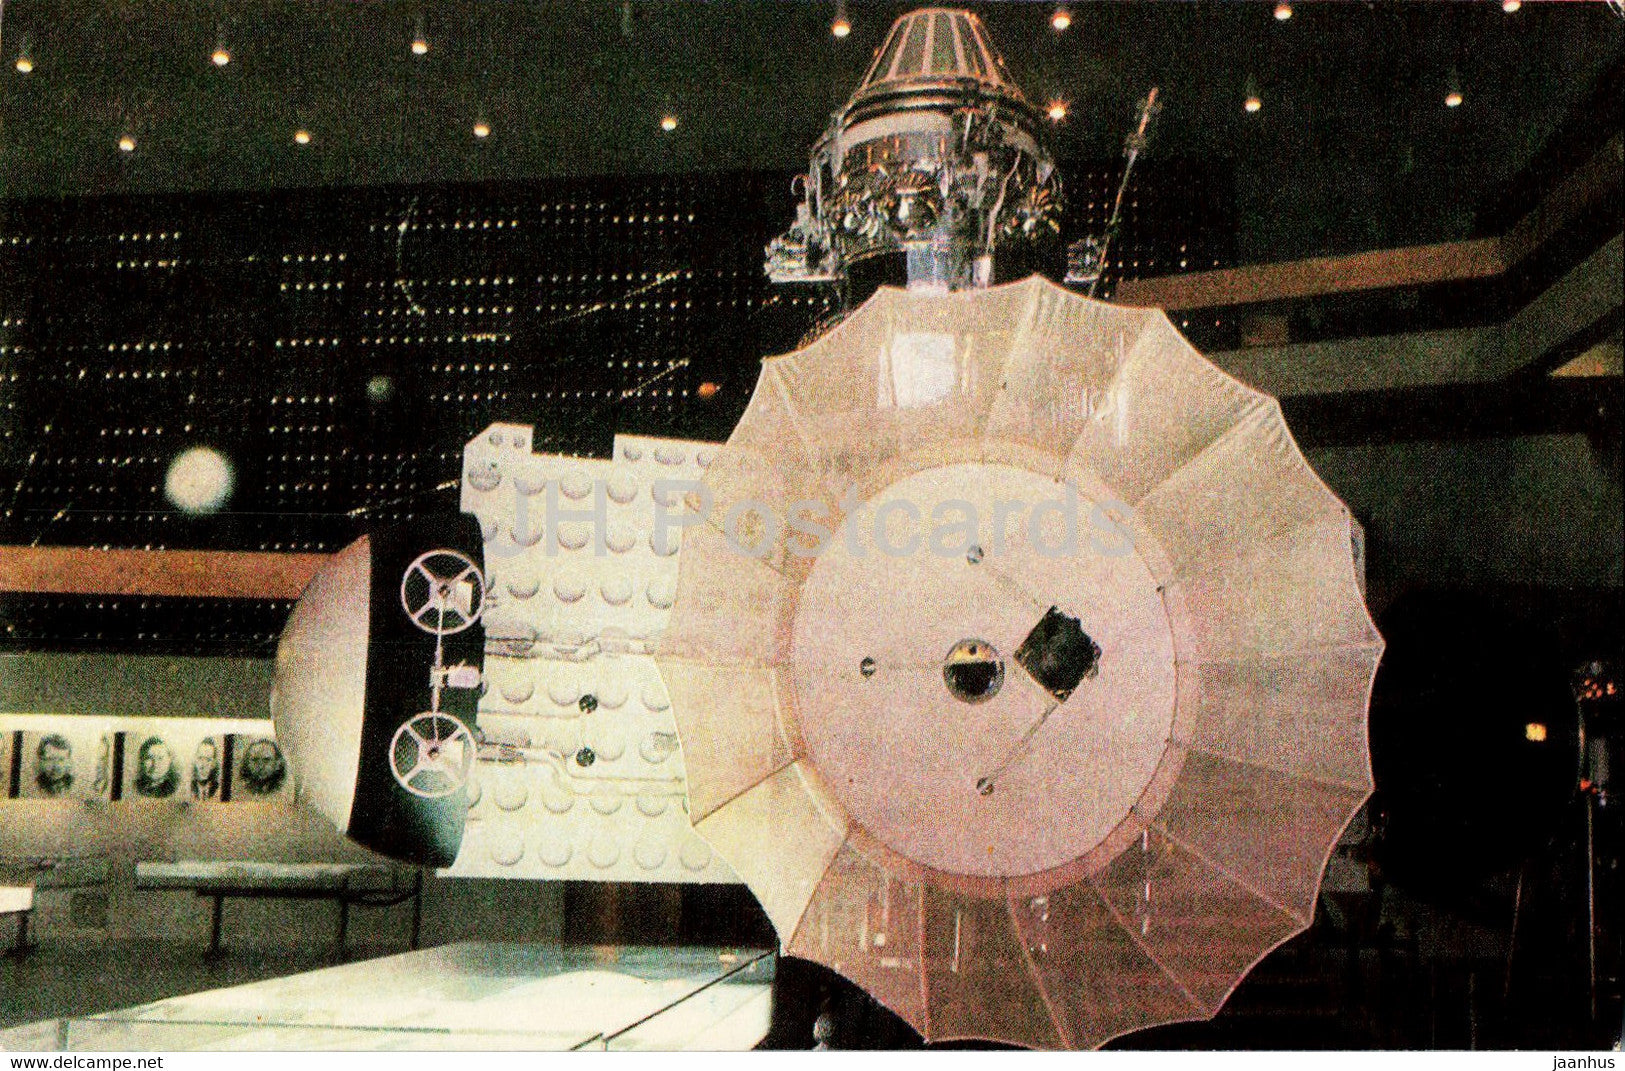 Kaluga - Tsiolkovsky State Museum of Cosmonautics Automatic Interplanetary station Zond 3 - 1971 - Russia USSR - unused - JH Postcards